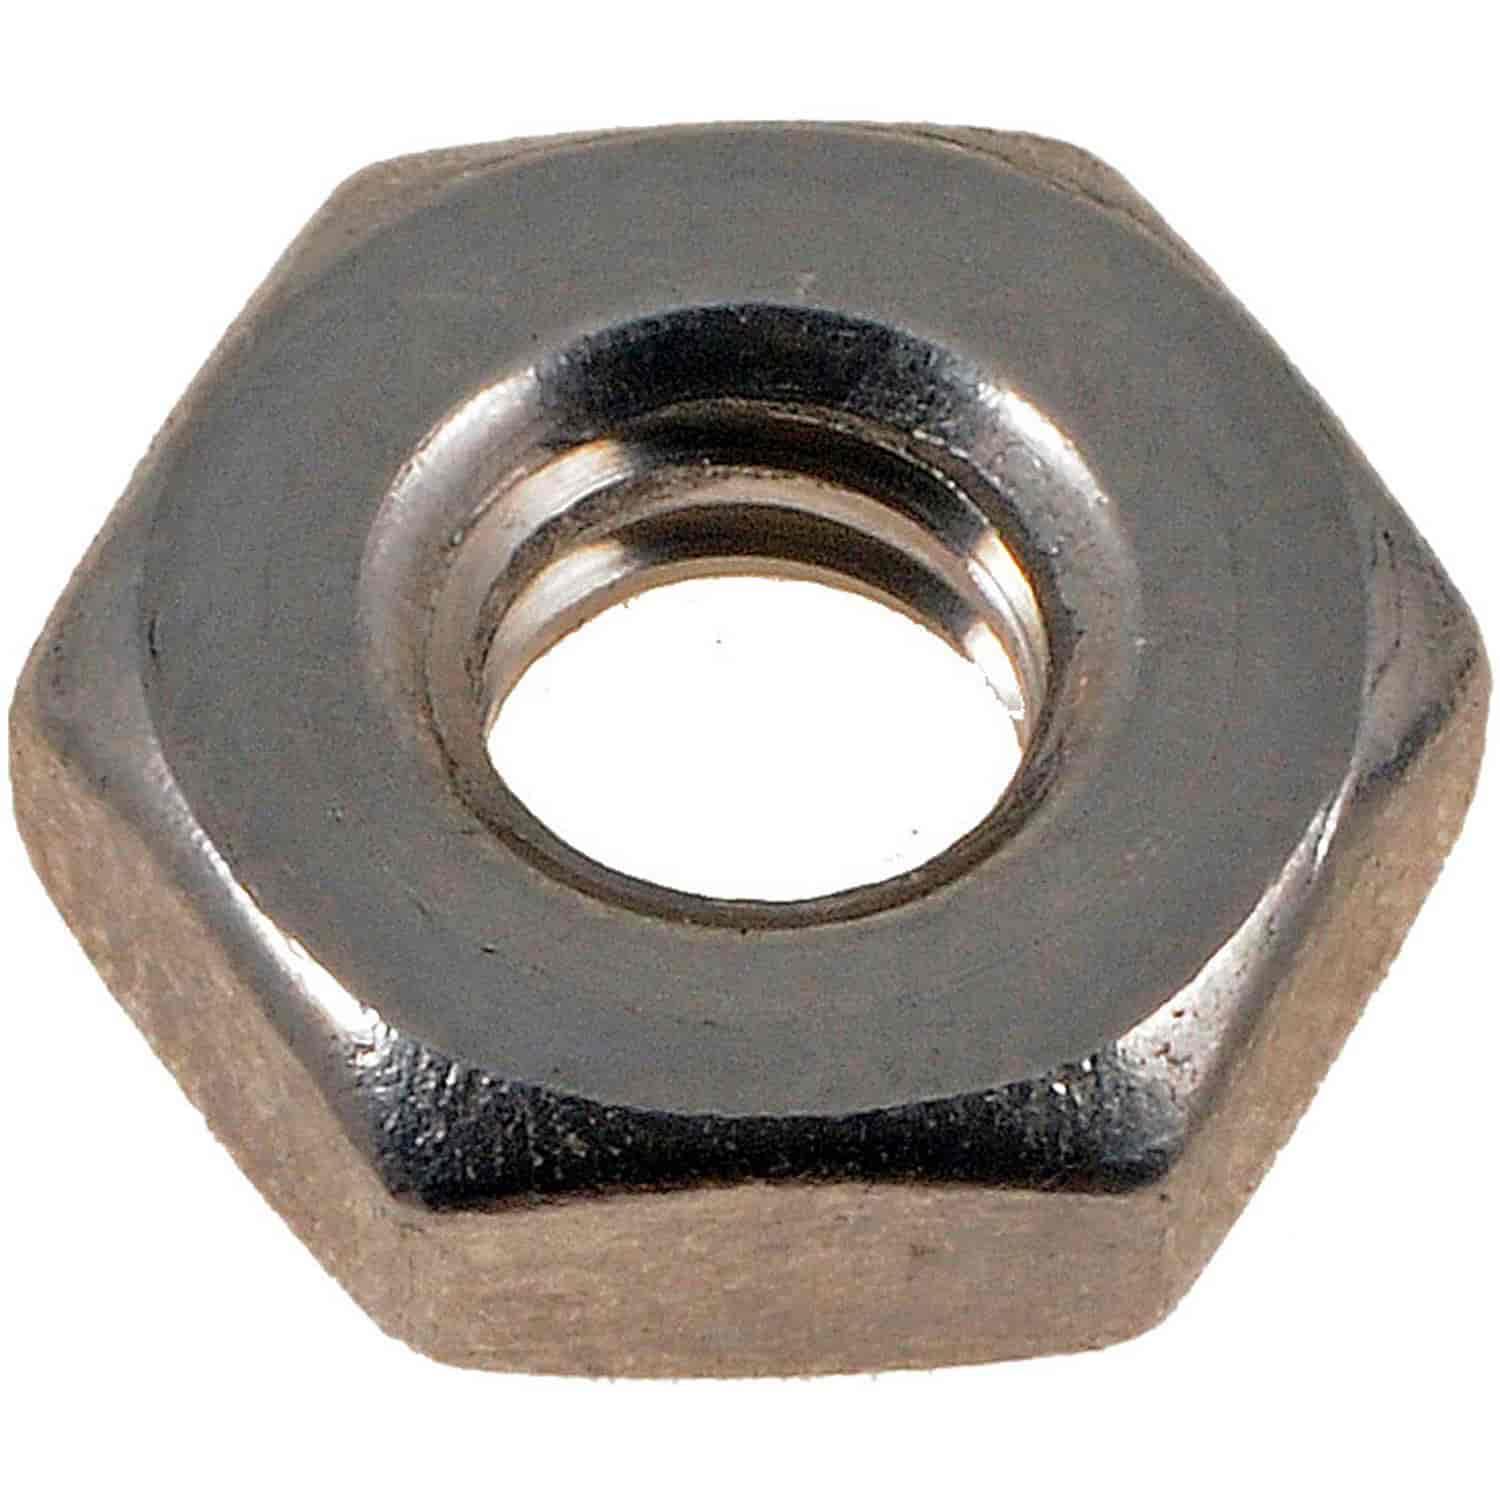 Stainless Steel Hex Machine Screw Nuts - 10-24